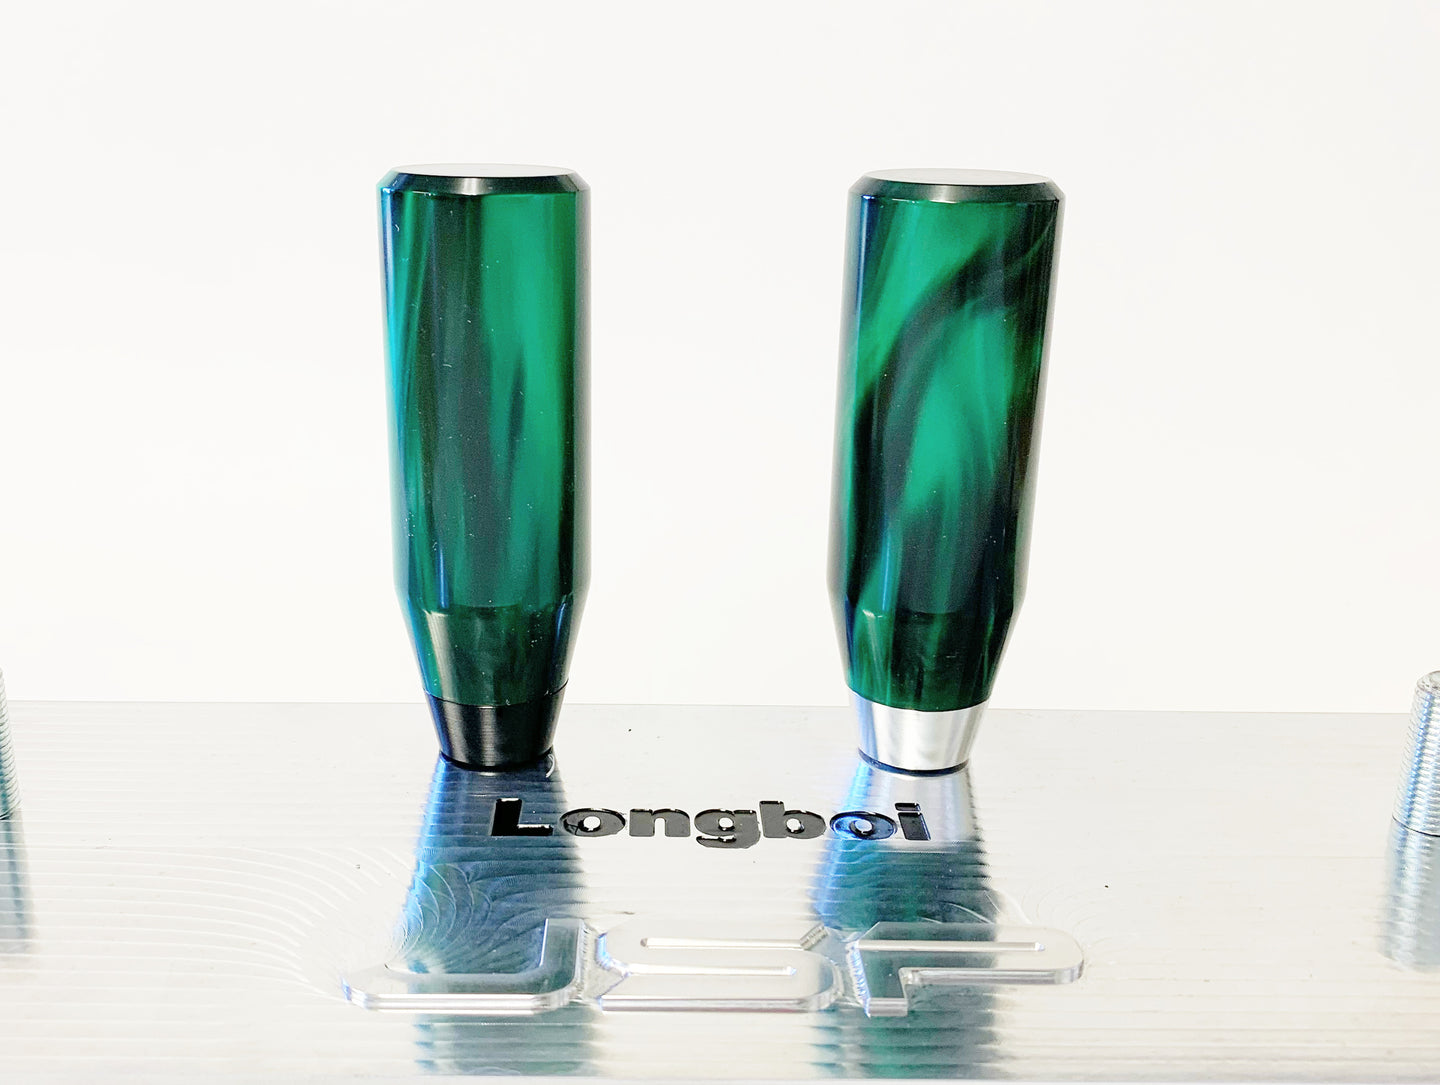 JSP Acrylic “Emerald Green” Longboi Shift knob